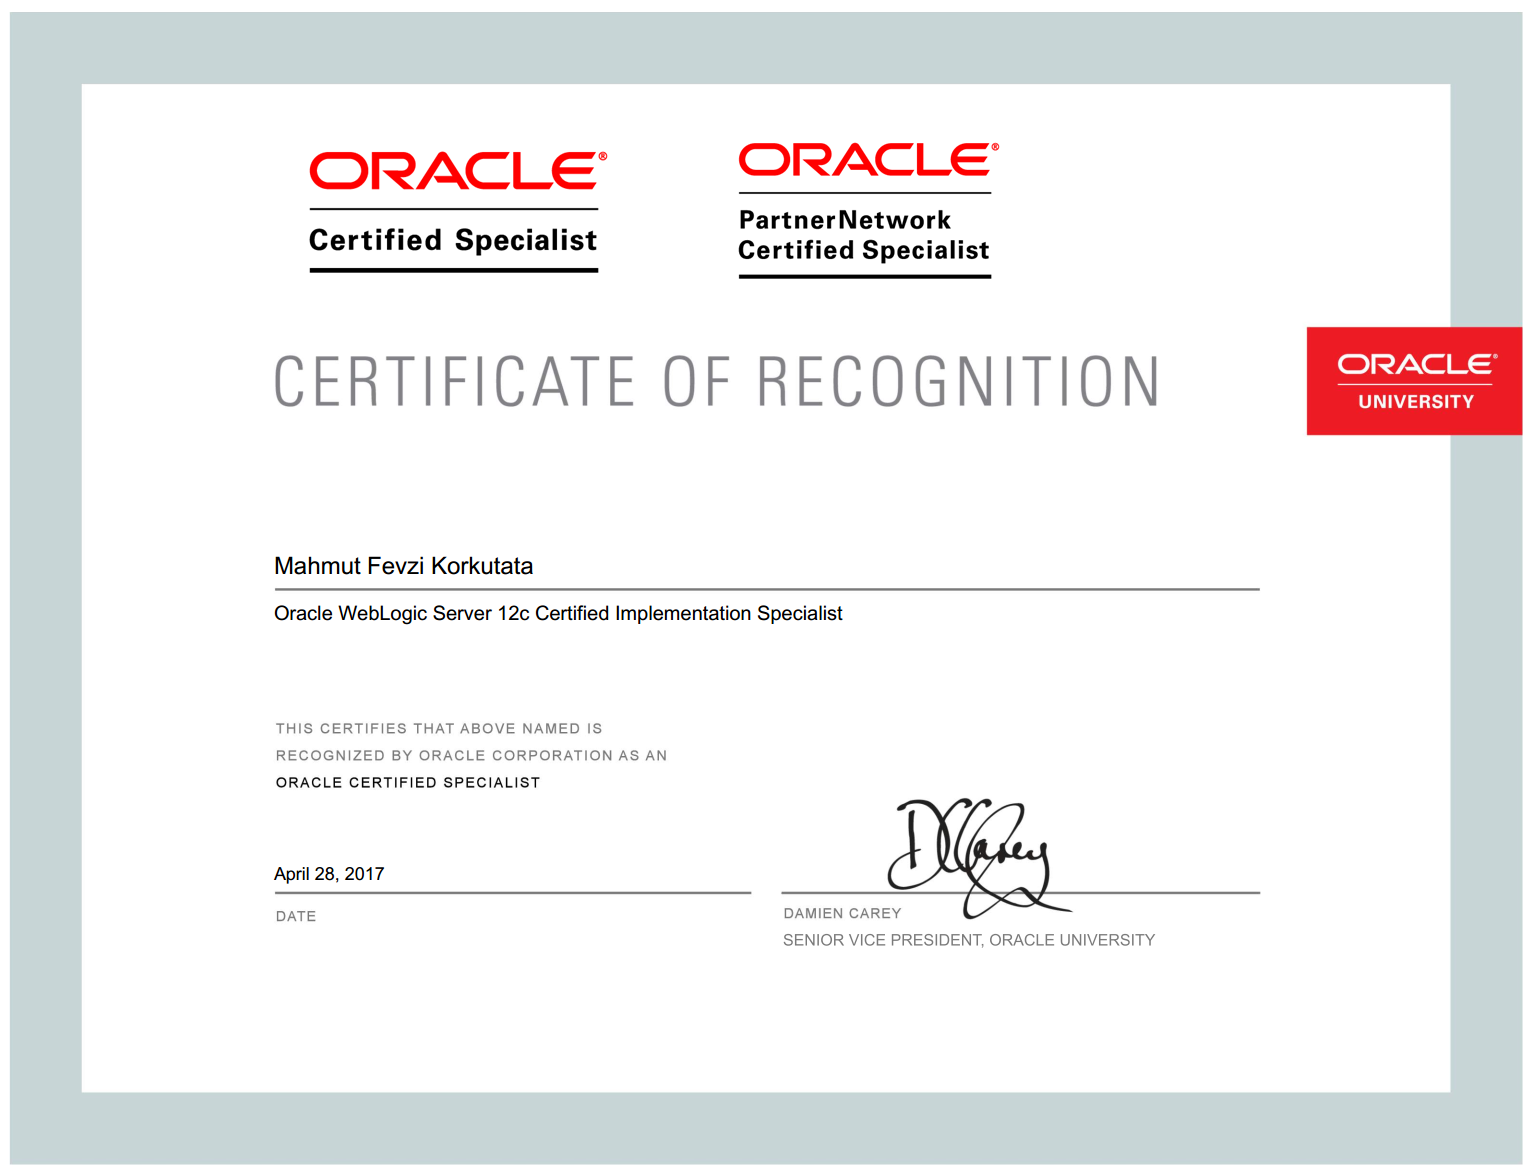 Mission Completed: Oracle WebLogic Server 12c Certified Implementation Specialist